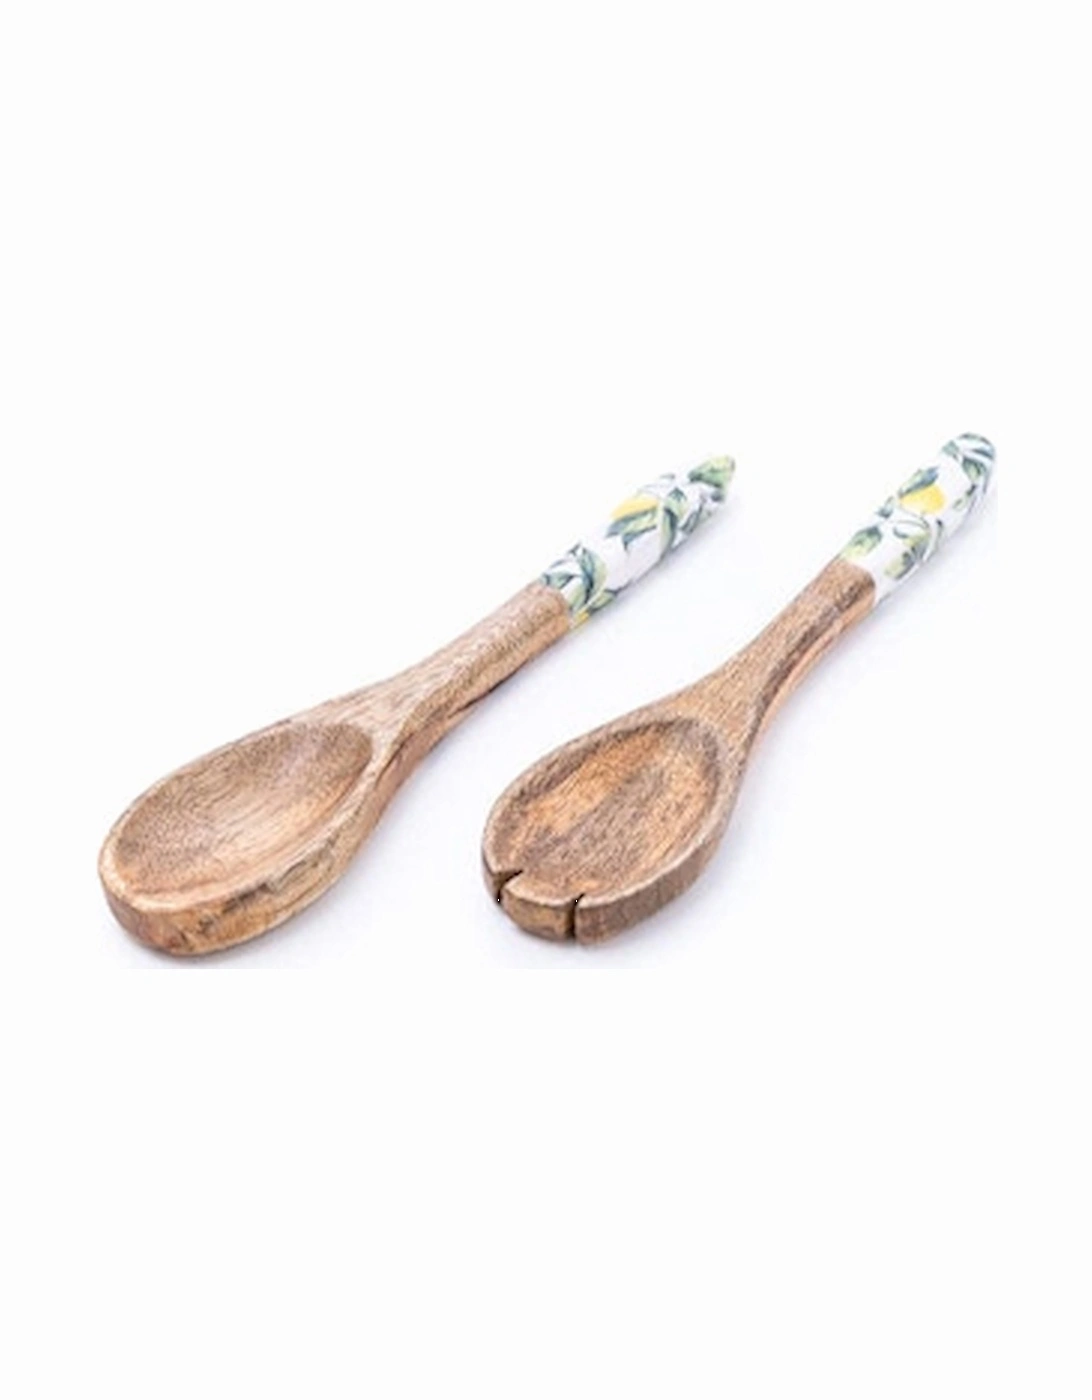 Handcrafted Lemon Wooden Fork & Spoon Set Of 2